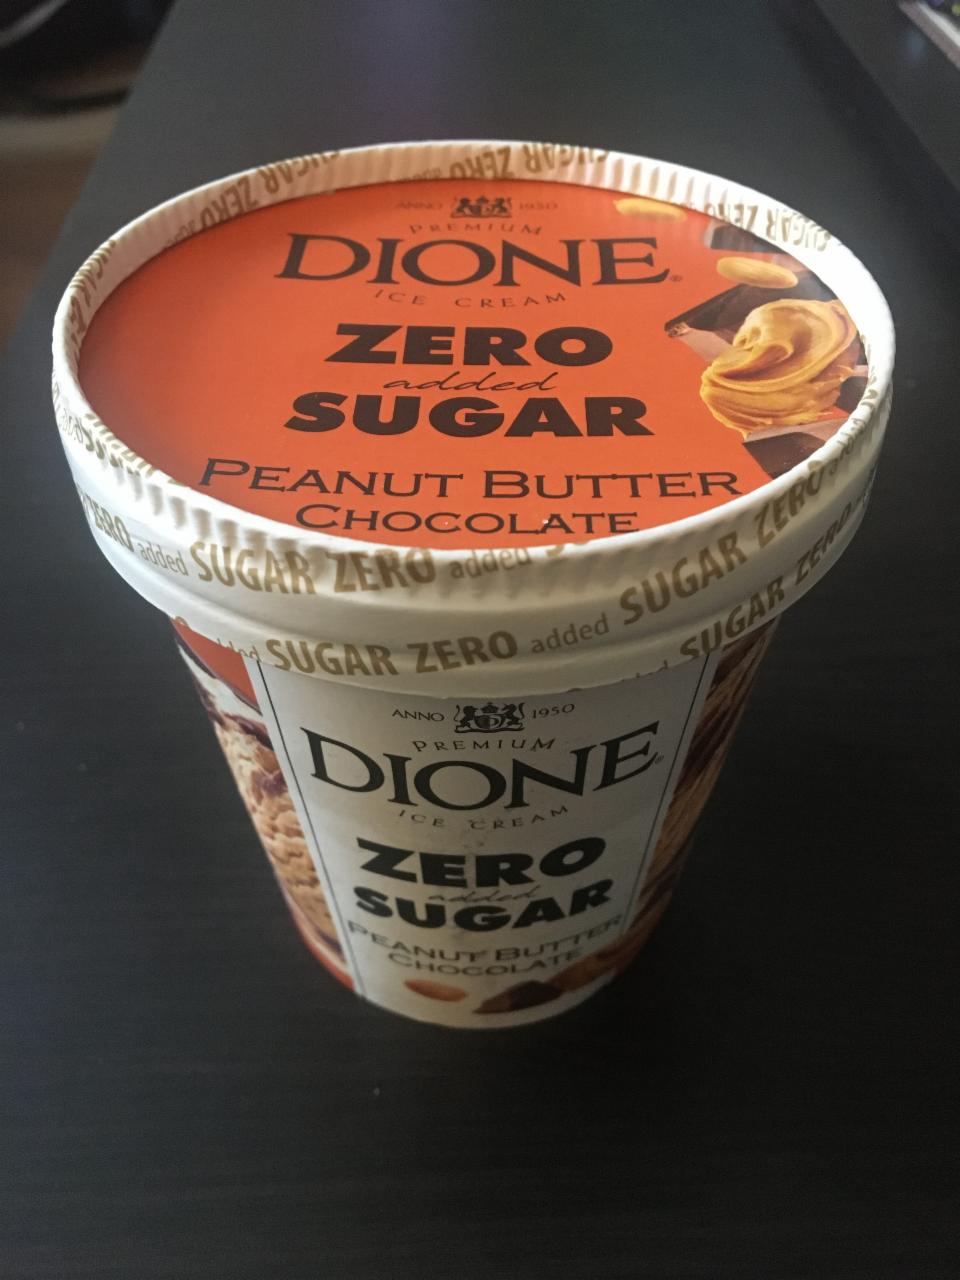 Fotografie - Premium Ice Cream Zero added sugar Peanut Butter Chocolate Dione